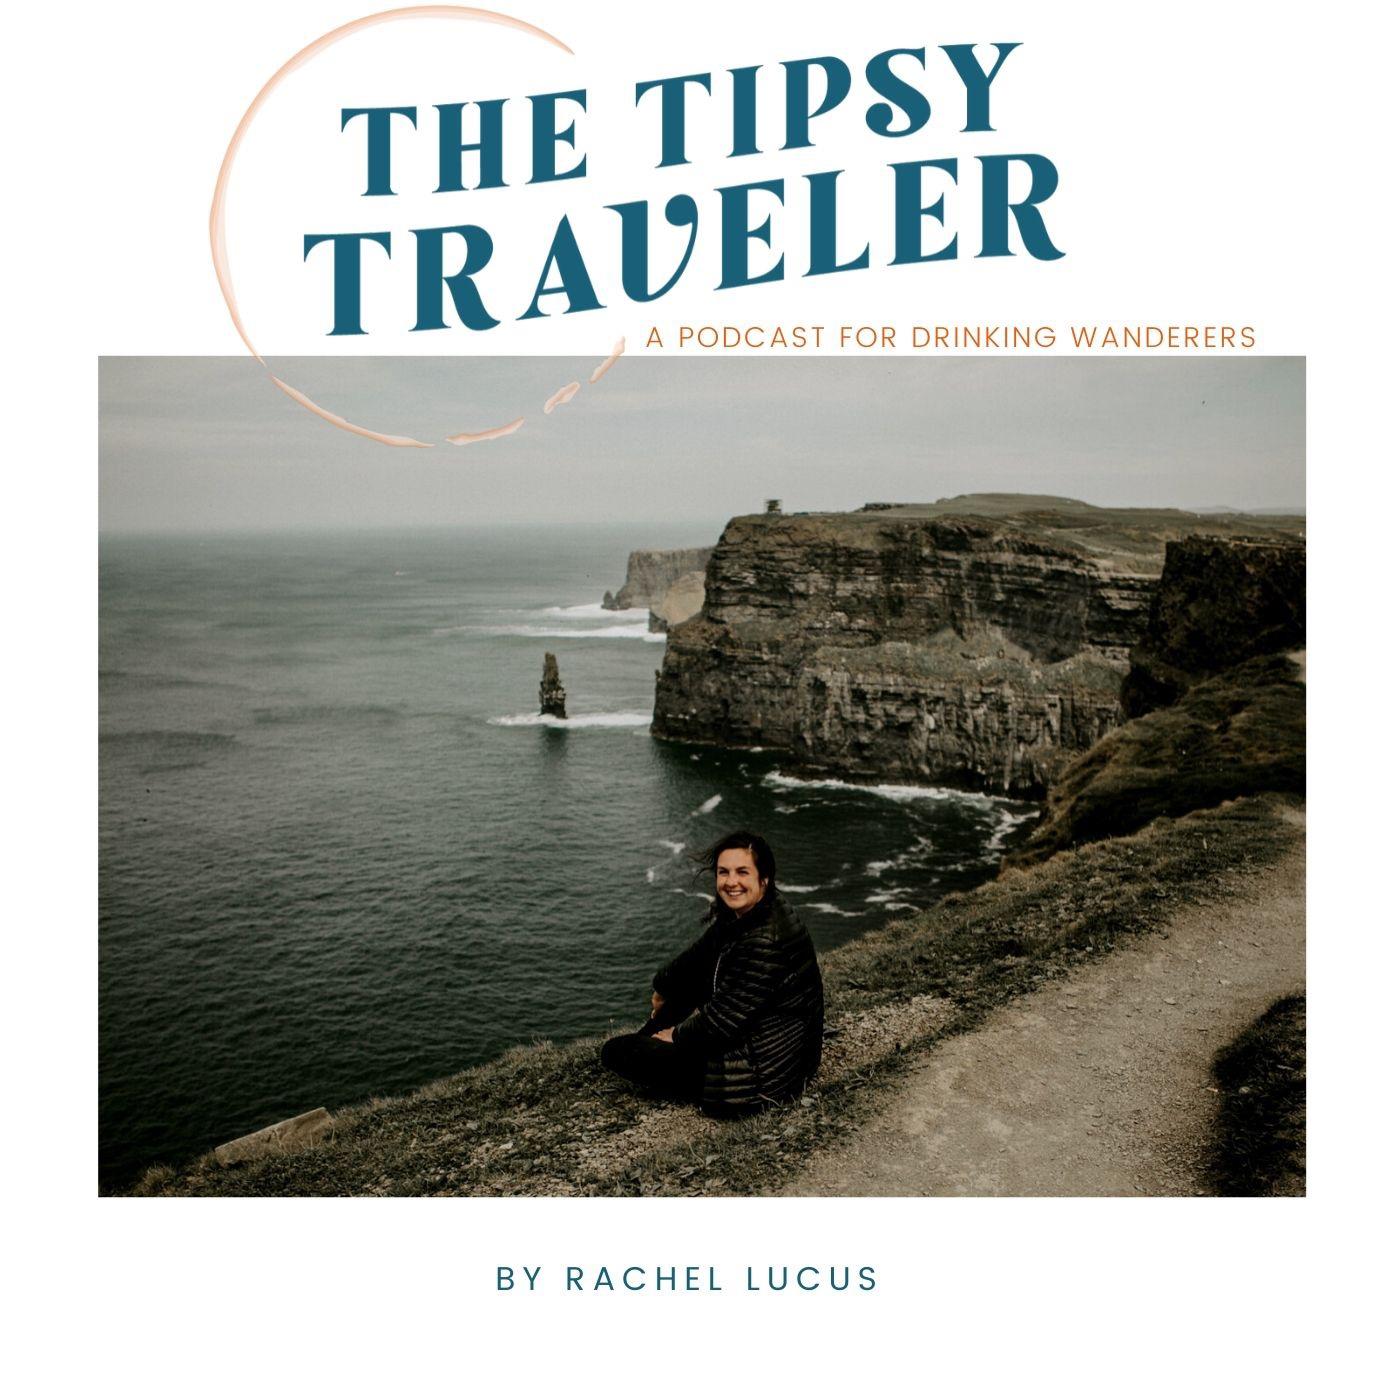 The Tipsy Traveler